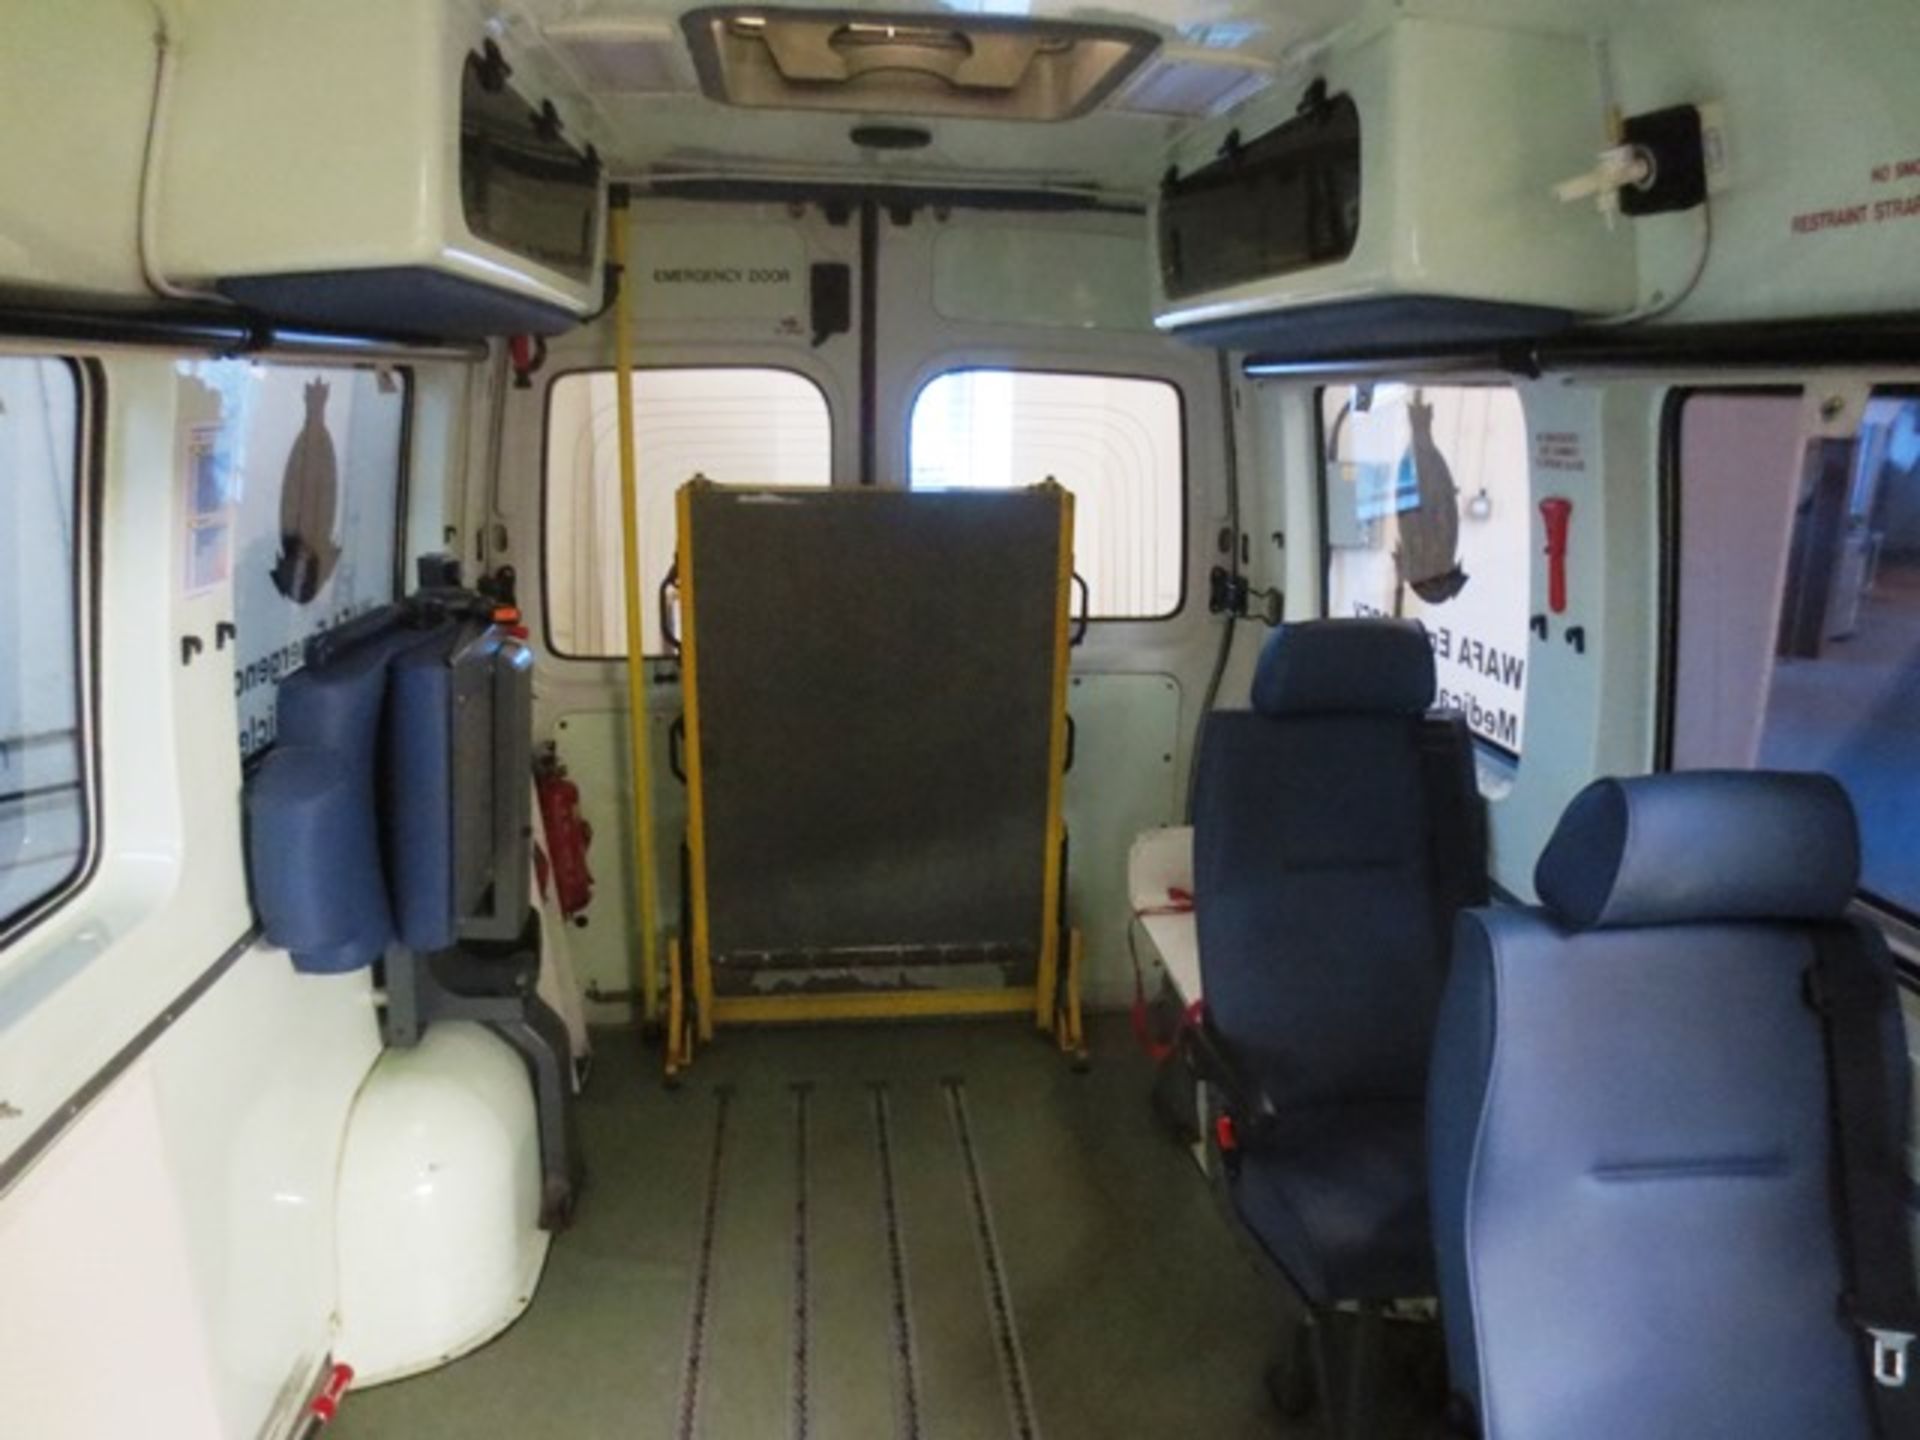 Renault Master LM35 Dci 100 LWB 2463cc diesel ambulance, reg no: KX06 BVK, MOT: 8/2/17, Company ref: - Image 9 of 13